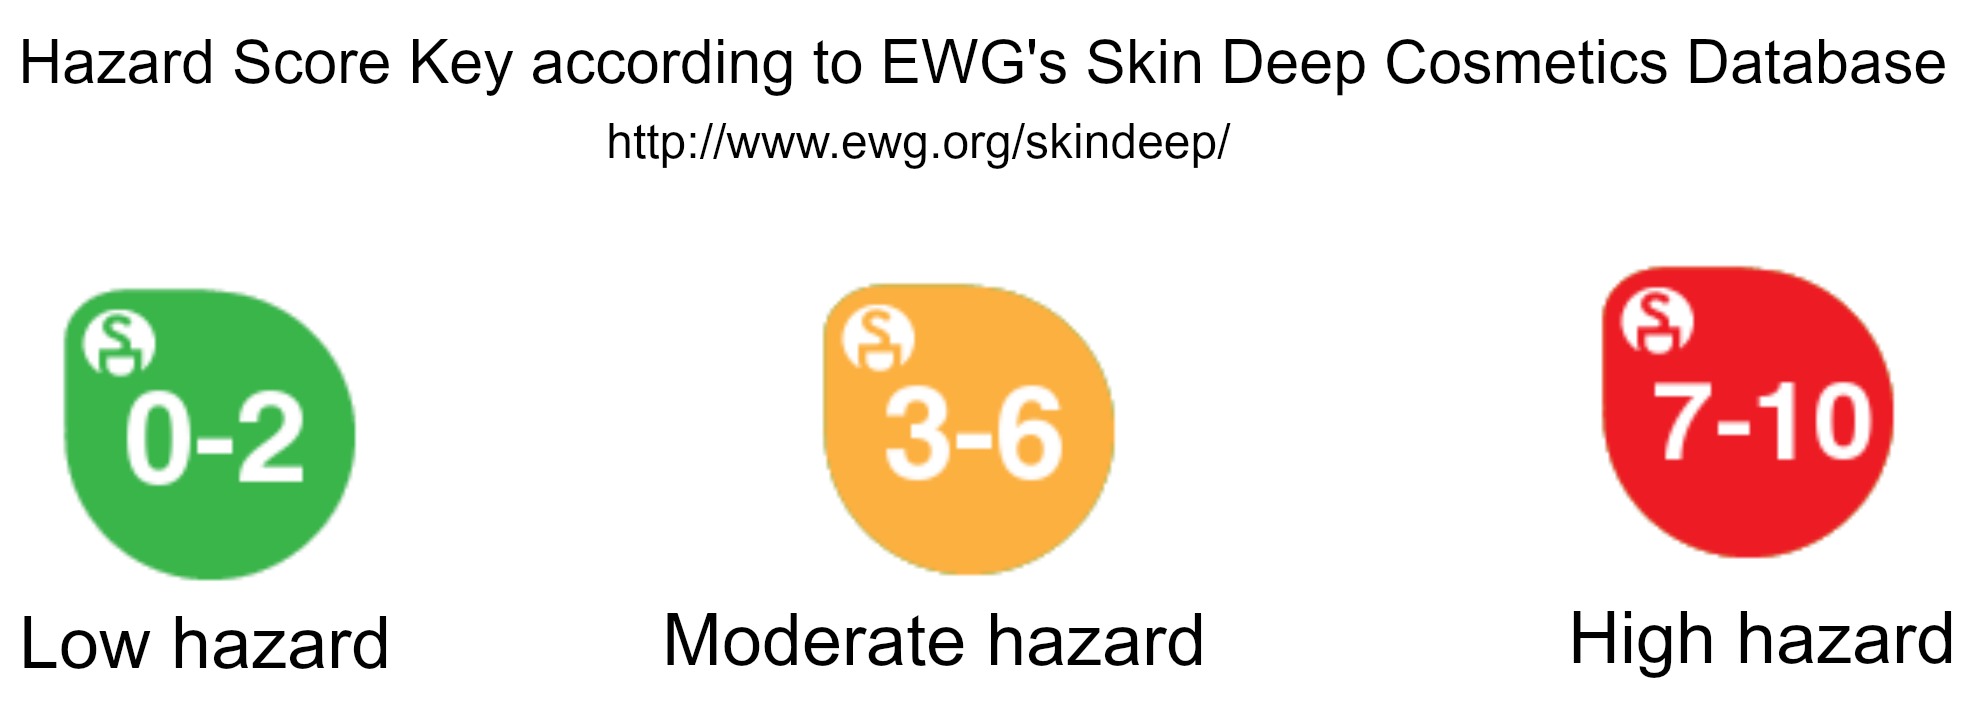 download ewg skin deep cosmetics safety database